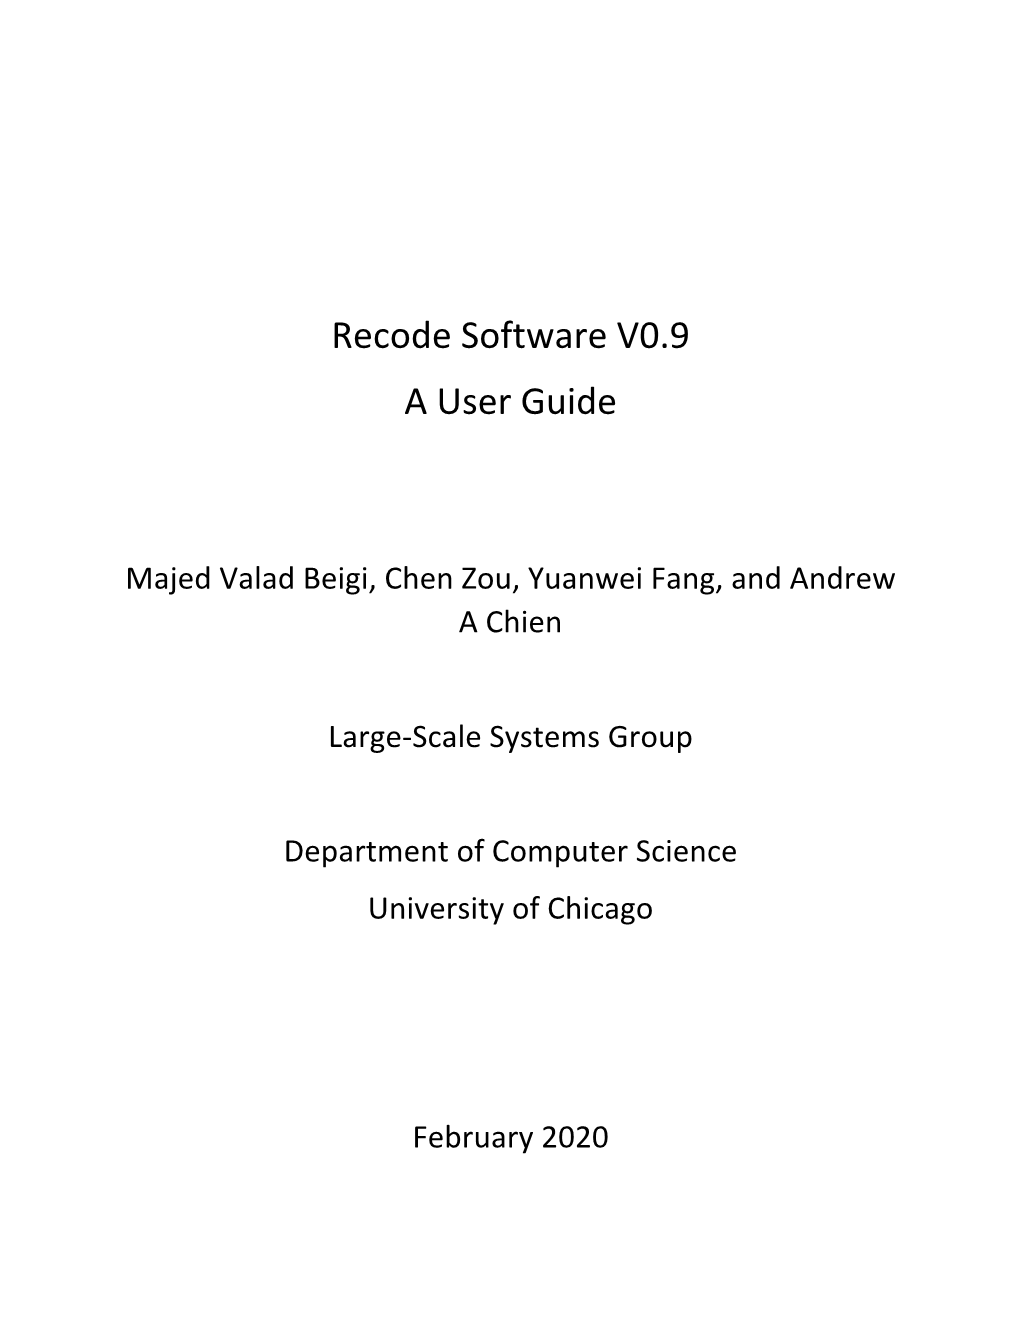 Recode Software V0.9 a User Guide